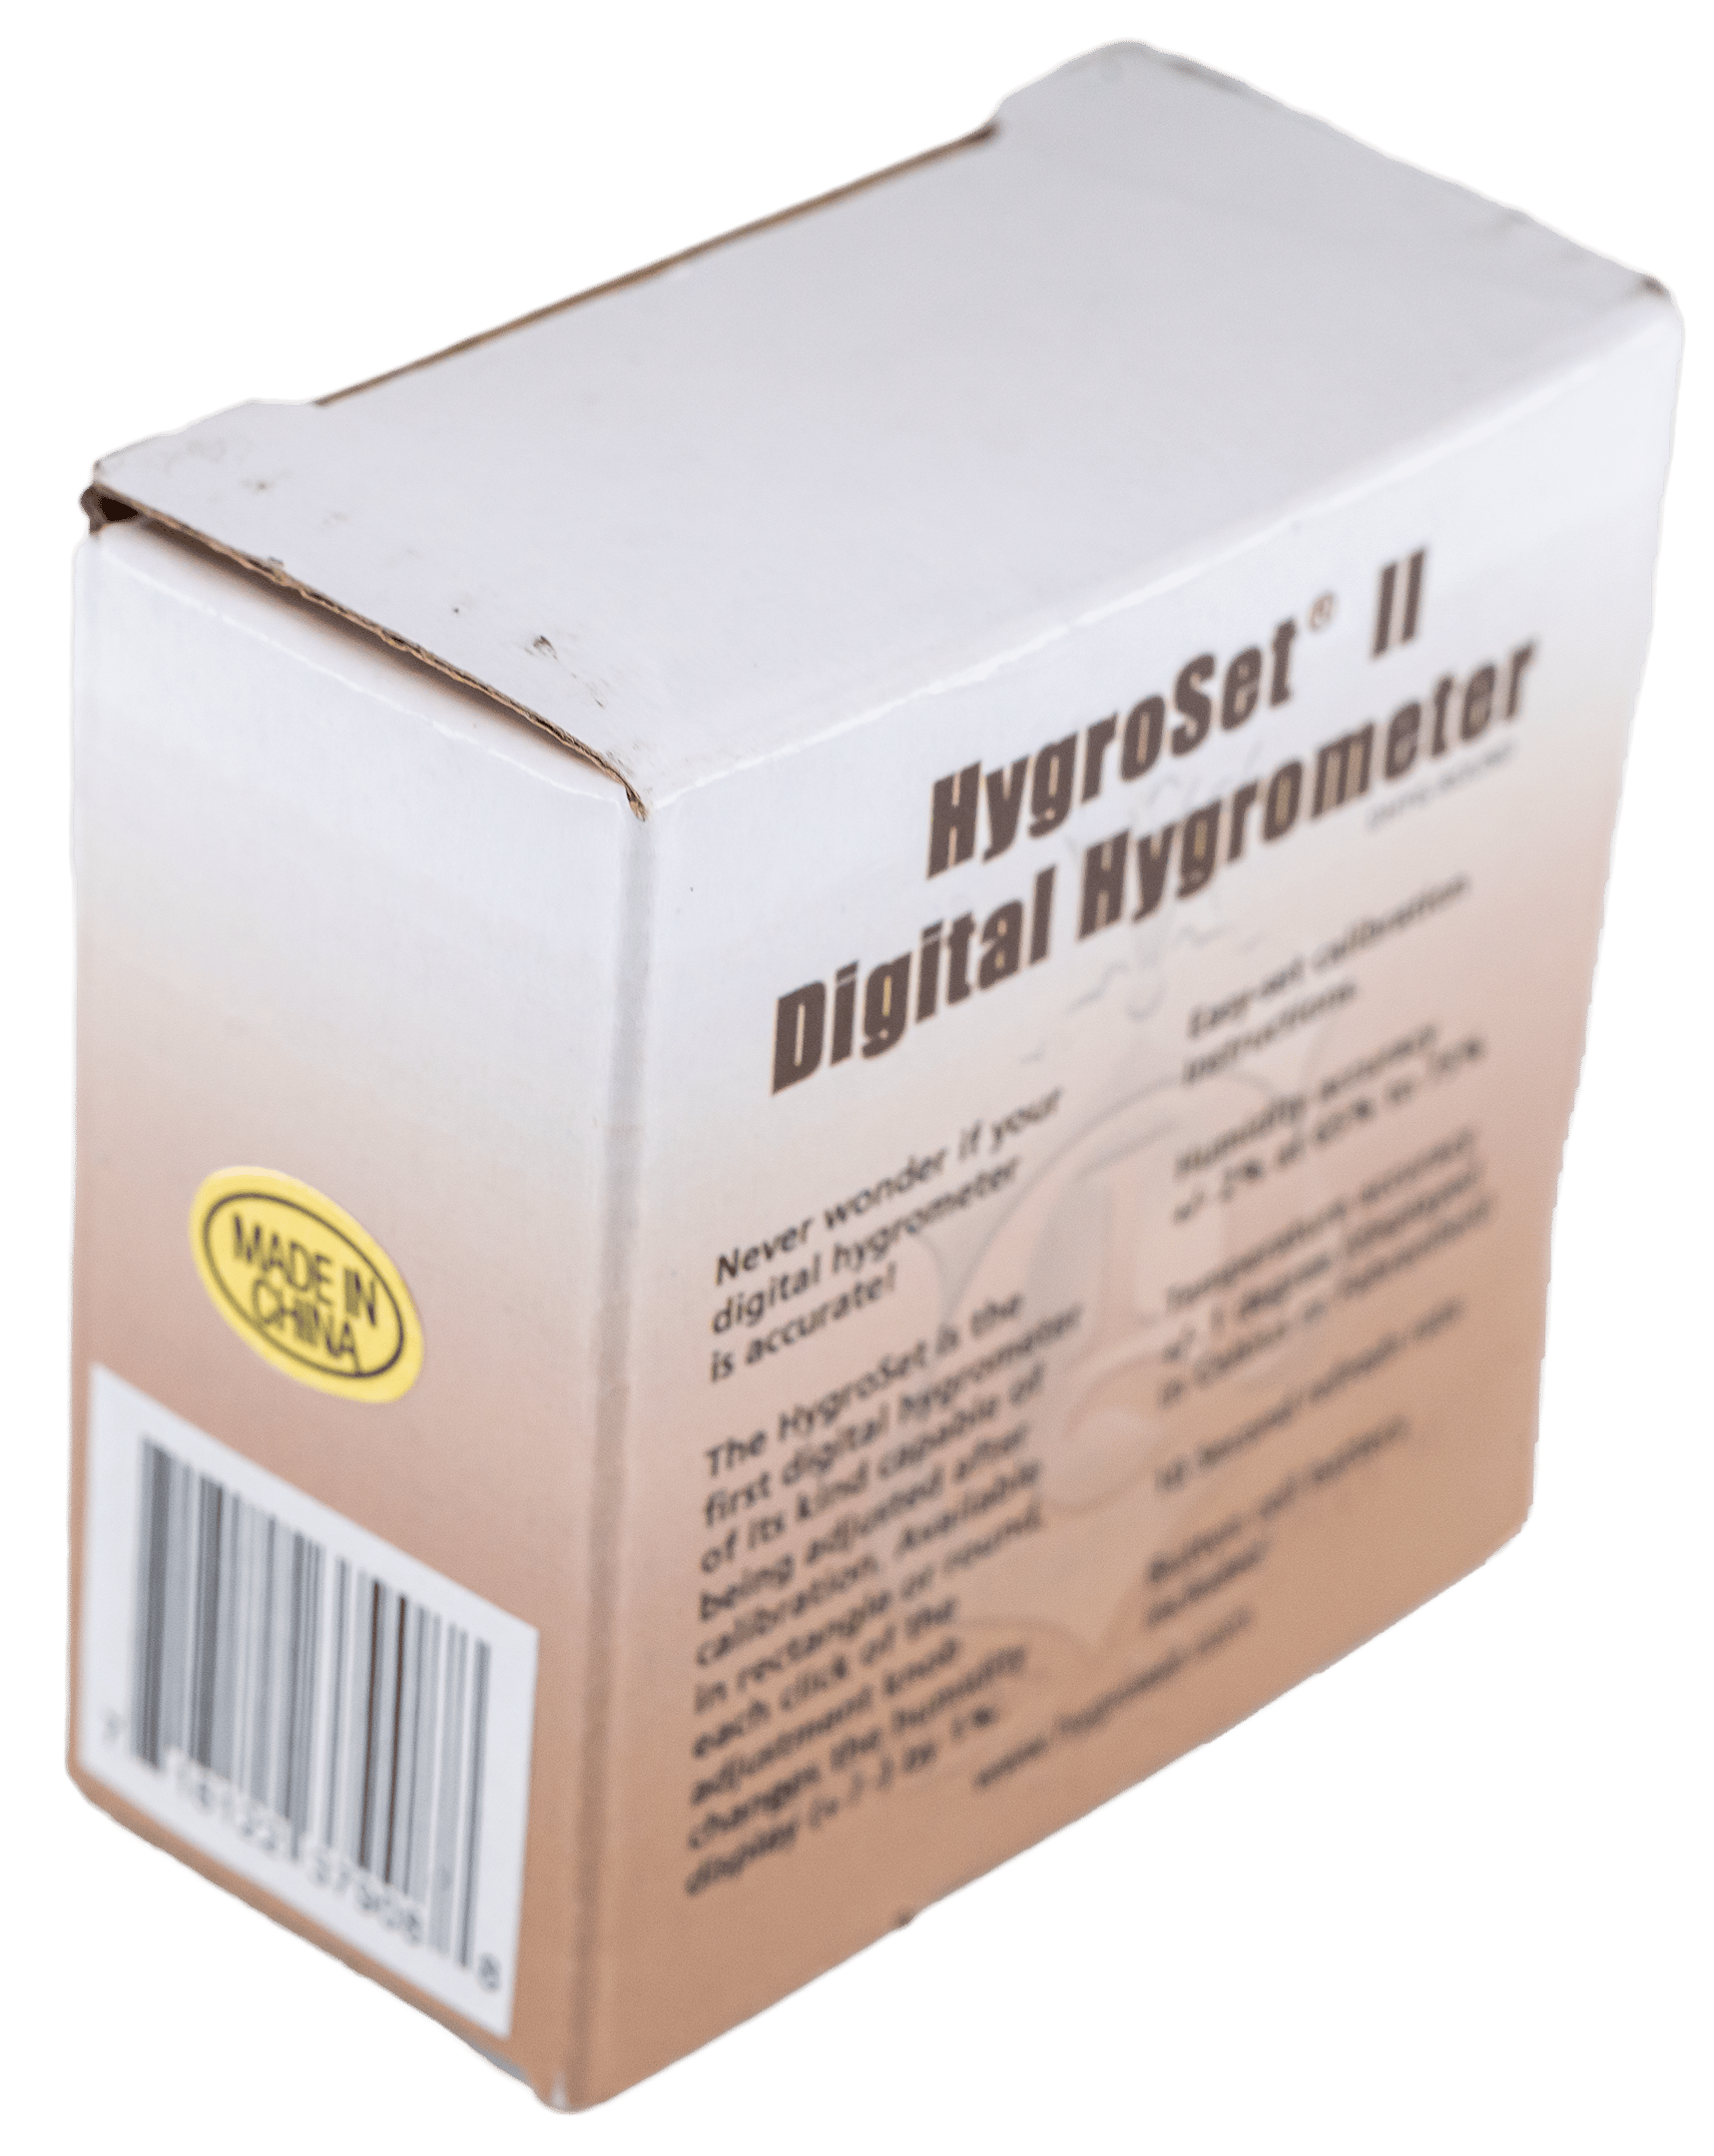 Quality Importers HygroSet II Digital Hygrometer - Cigar Accessory Review